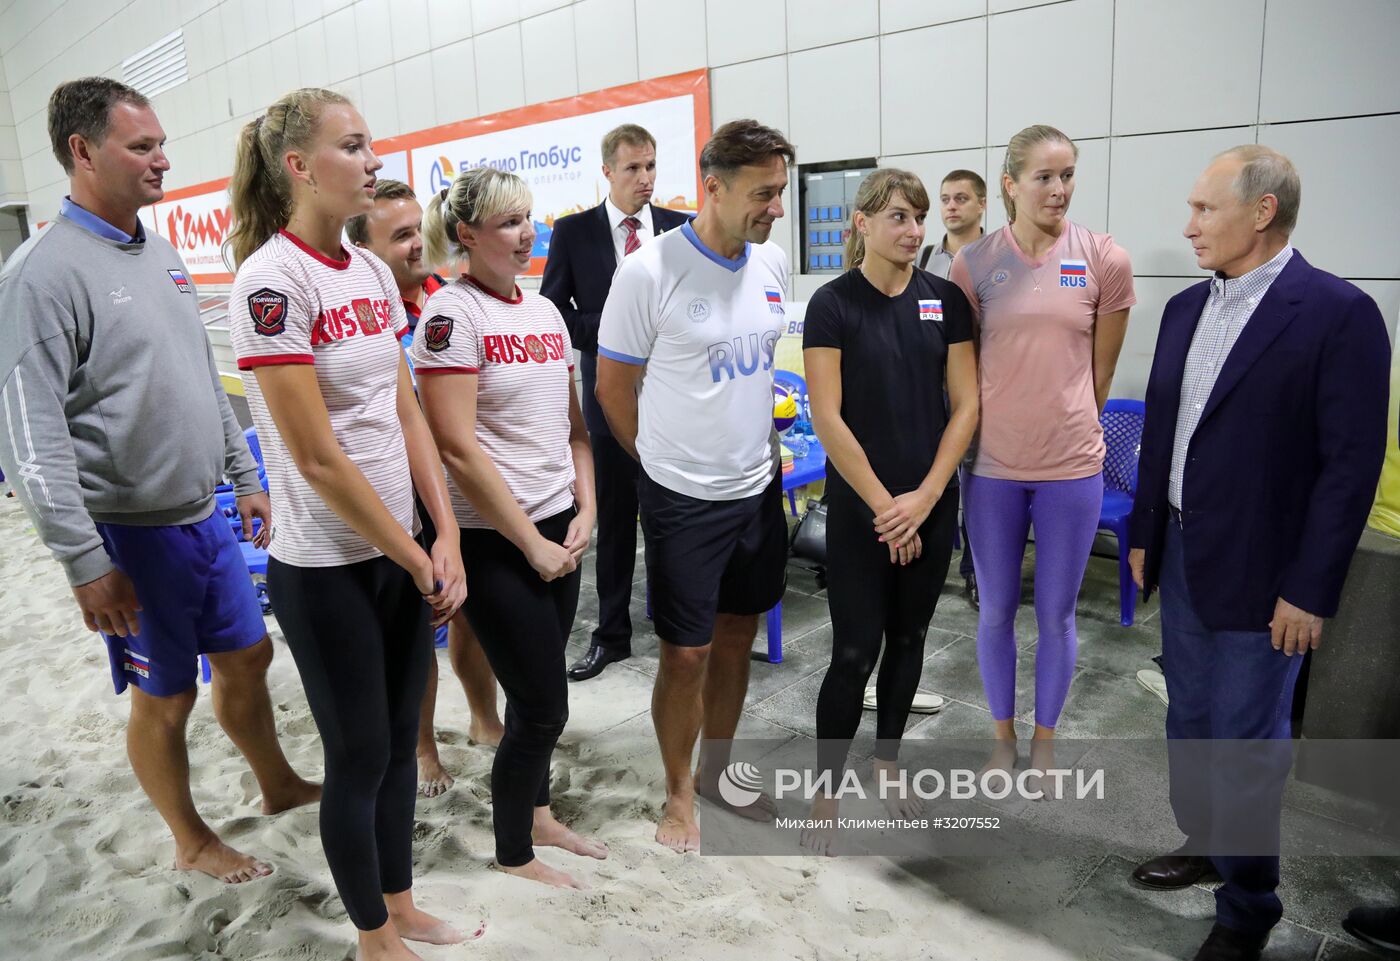 Президент РФ В. Путин посетил спортивный комплекс "Спорт-Инн" в Сочи